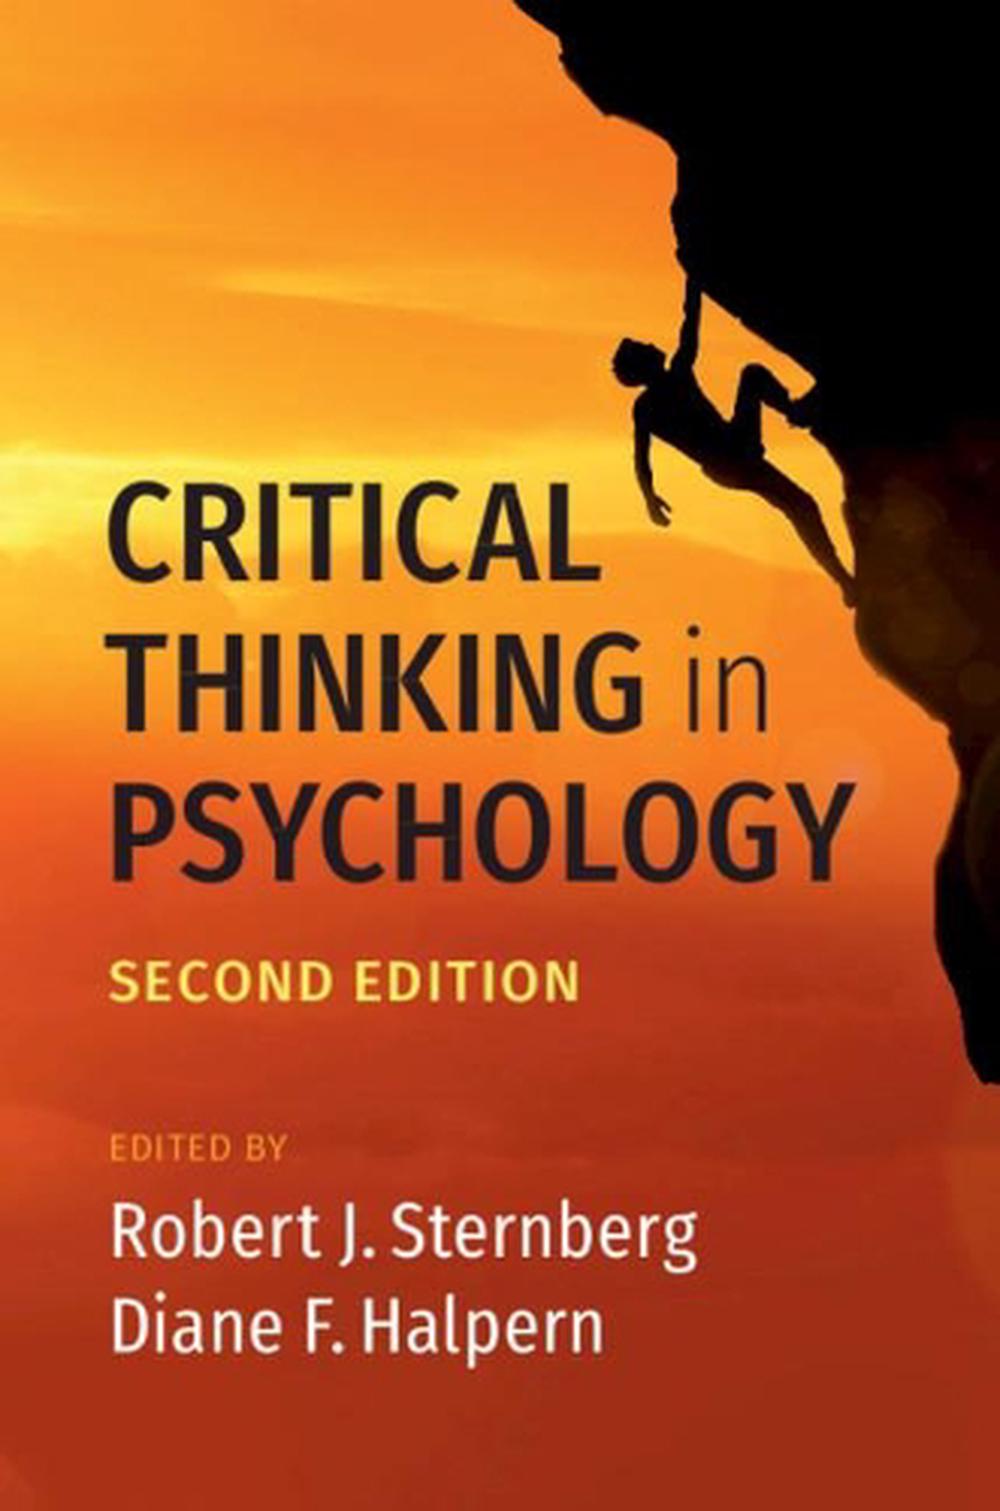 books that improve critical thinking